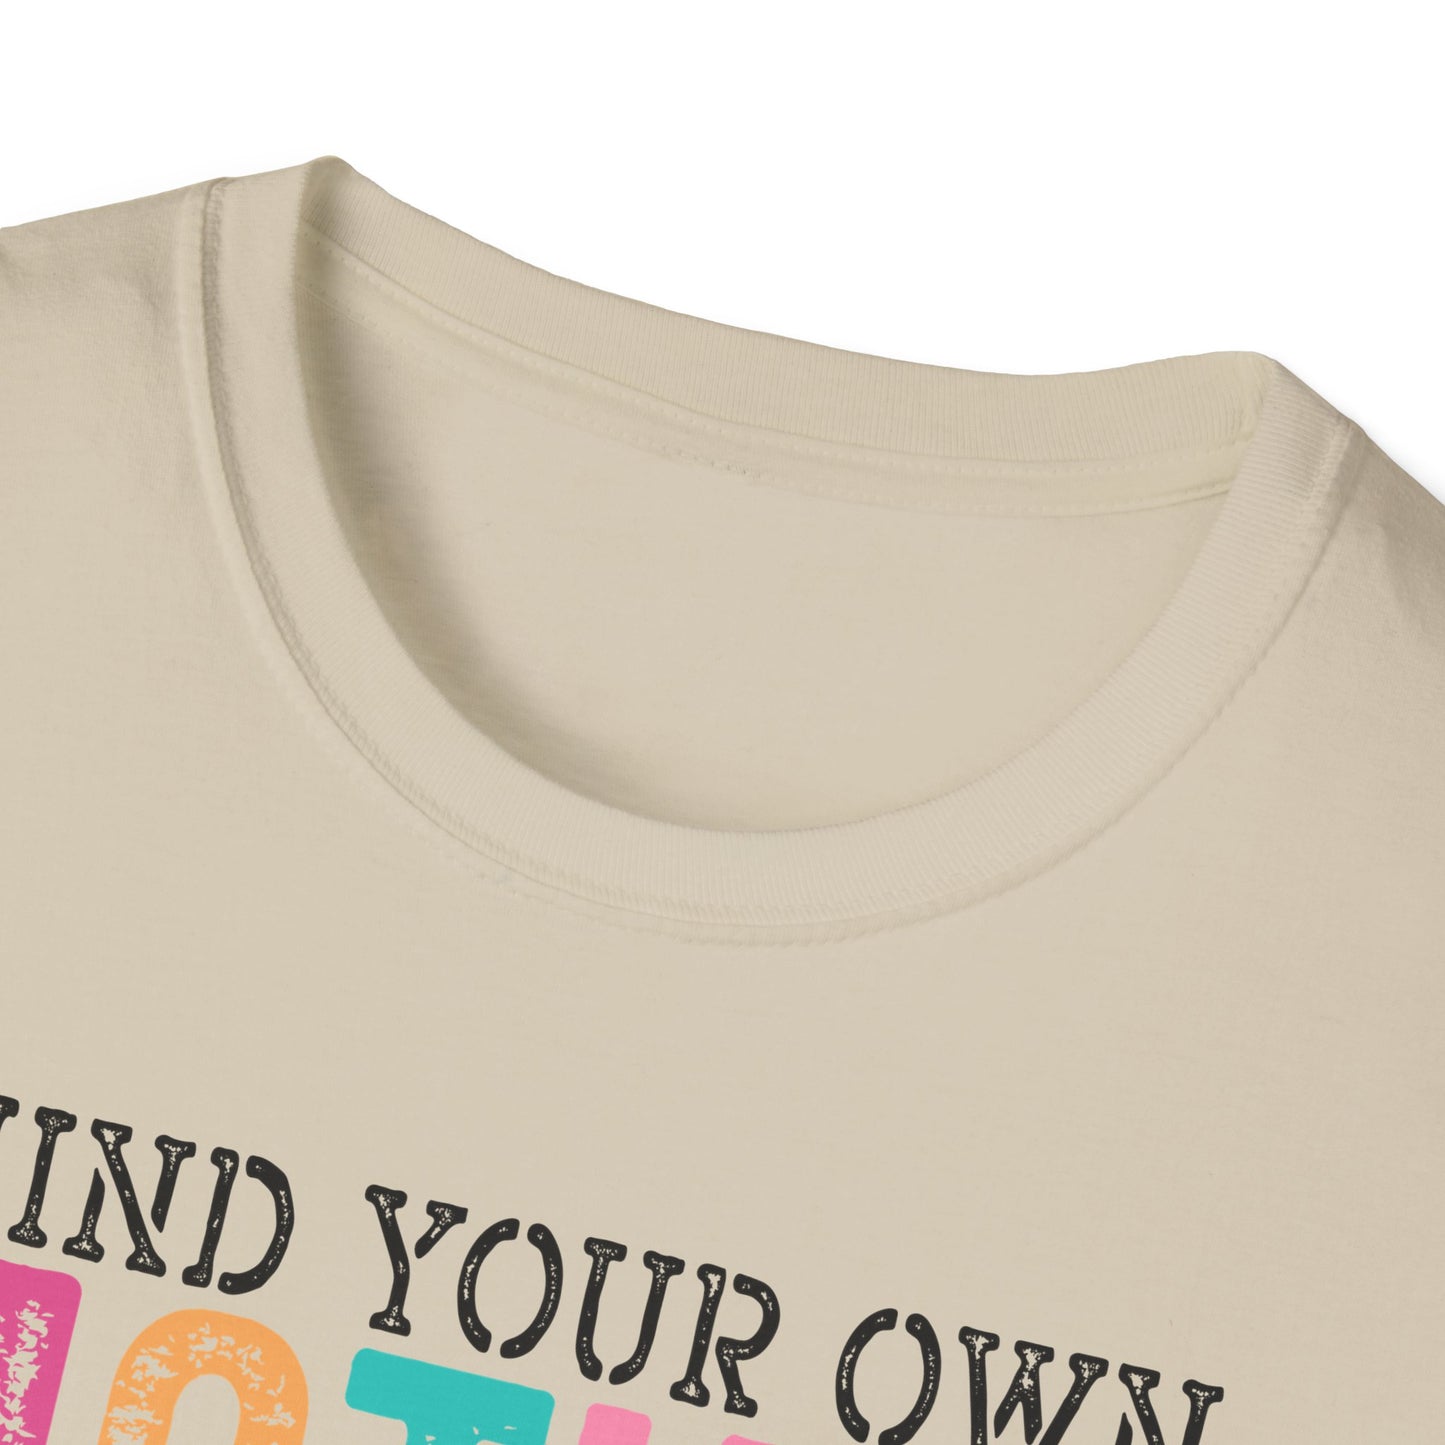 Mind Your Own Motherhood - Unisex Softstyle T-Shirt